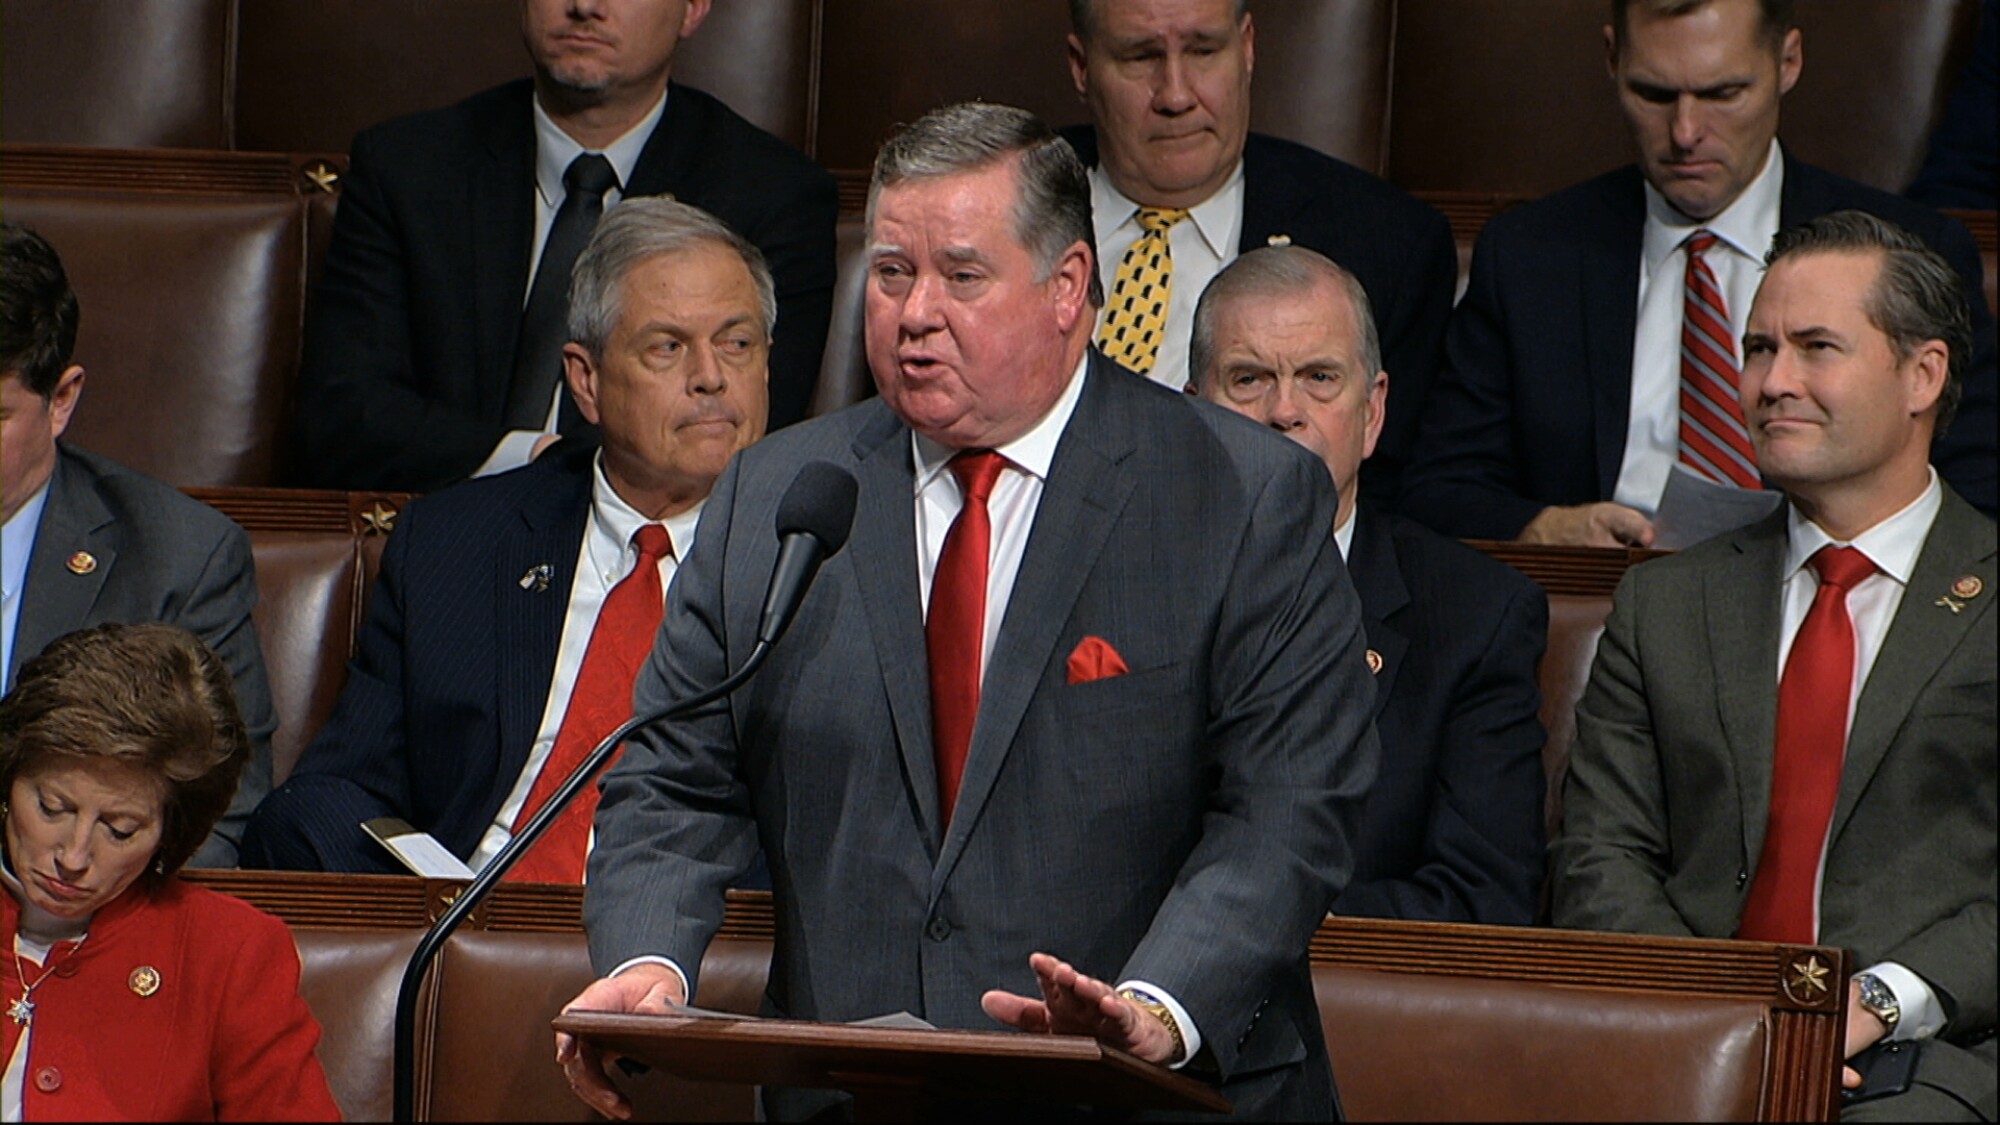 MP Ken Calvert (R-Corona) speaks in the House of Representatives.